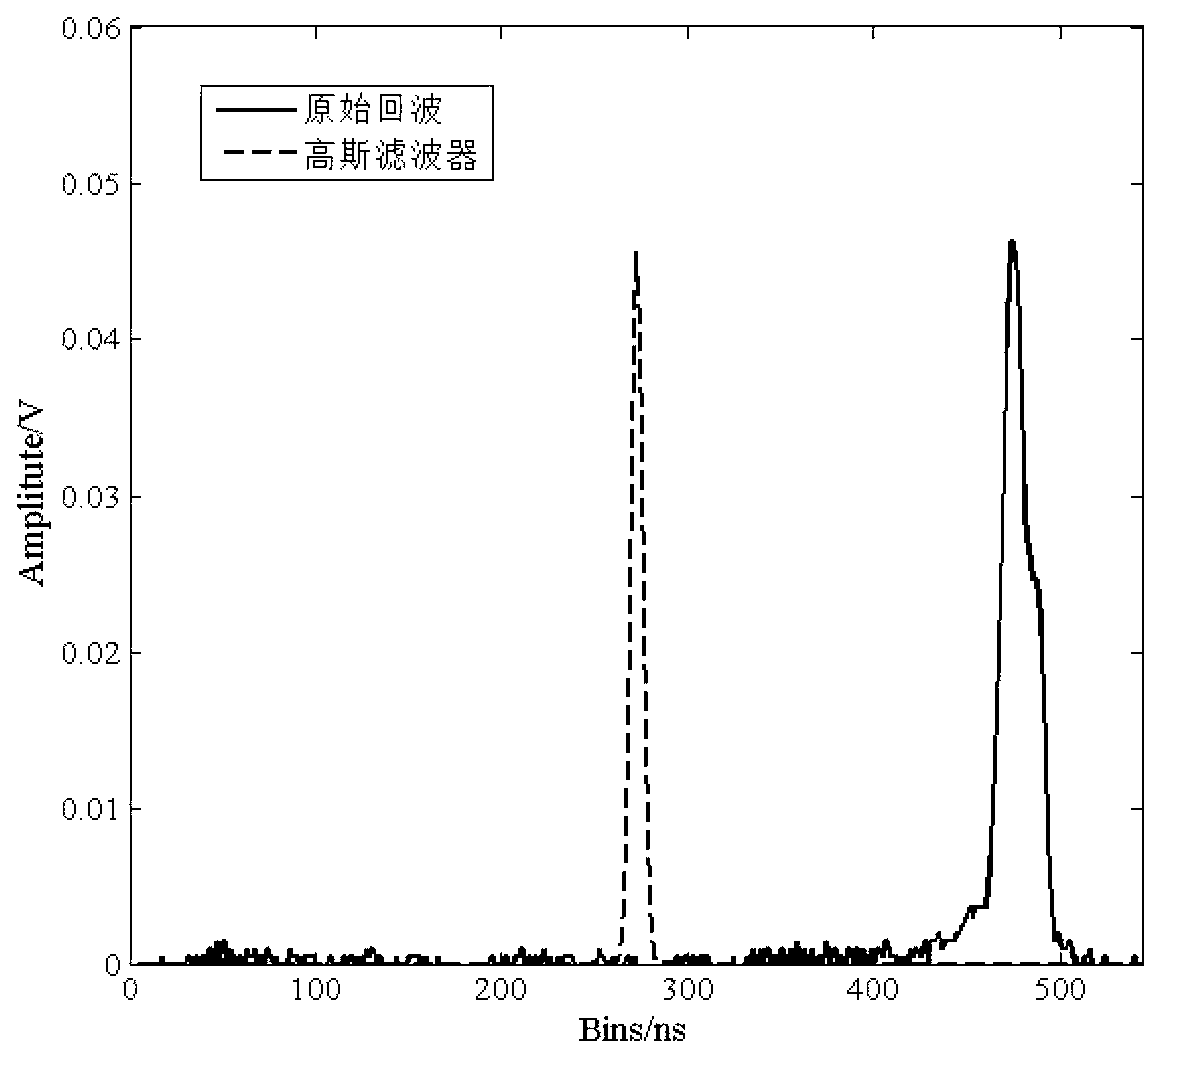 Full-waveform laser radar echo data gaussian decomposition method based on genetic algorithm